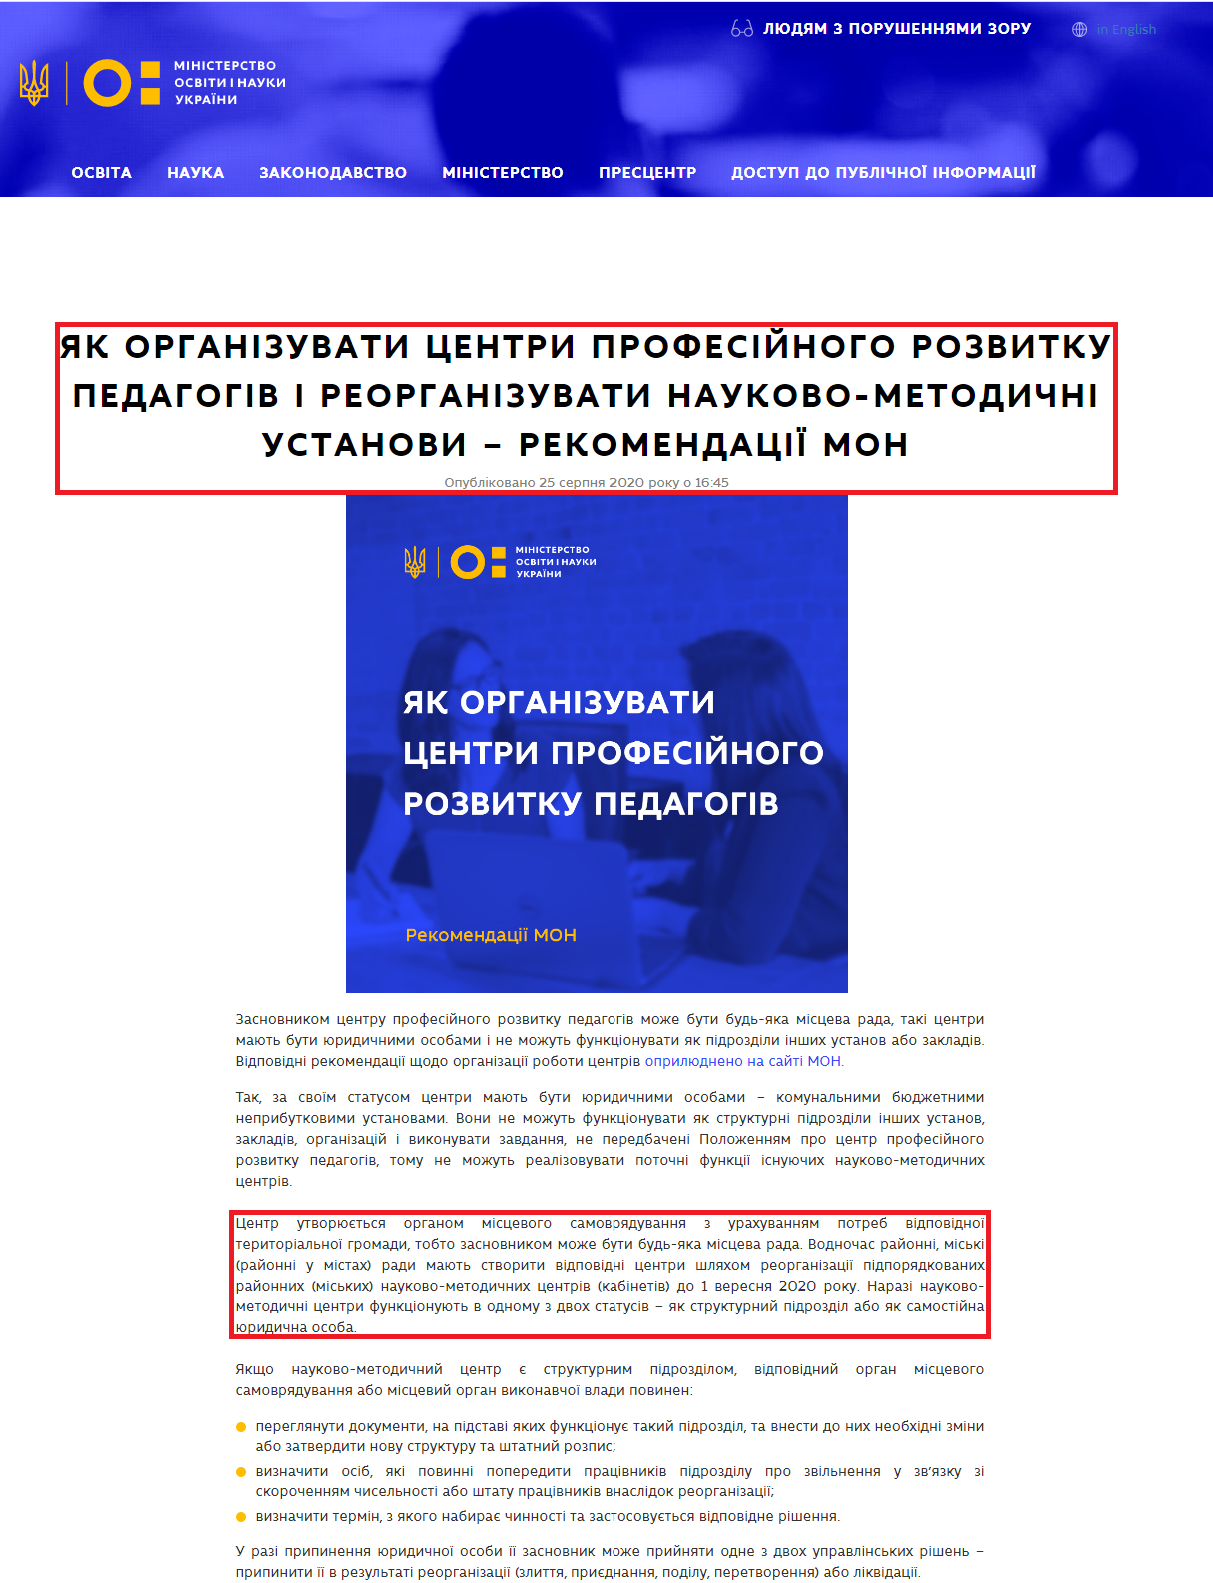 https://mon.gov.ua/ua/news/yak-organizuvati-centri-profesijnogo-rozvitku-pedagogiv-i-reorganizuvati-naukovo-metodichni-ustanovi-rekomendaciyi-mon